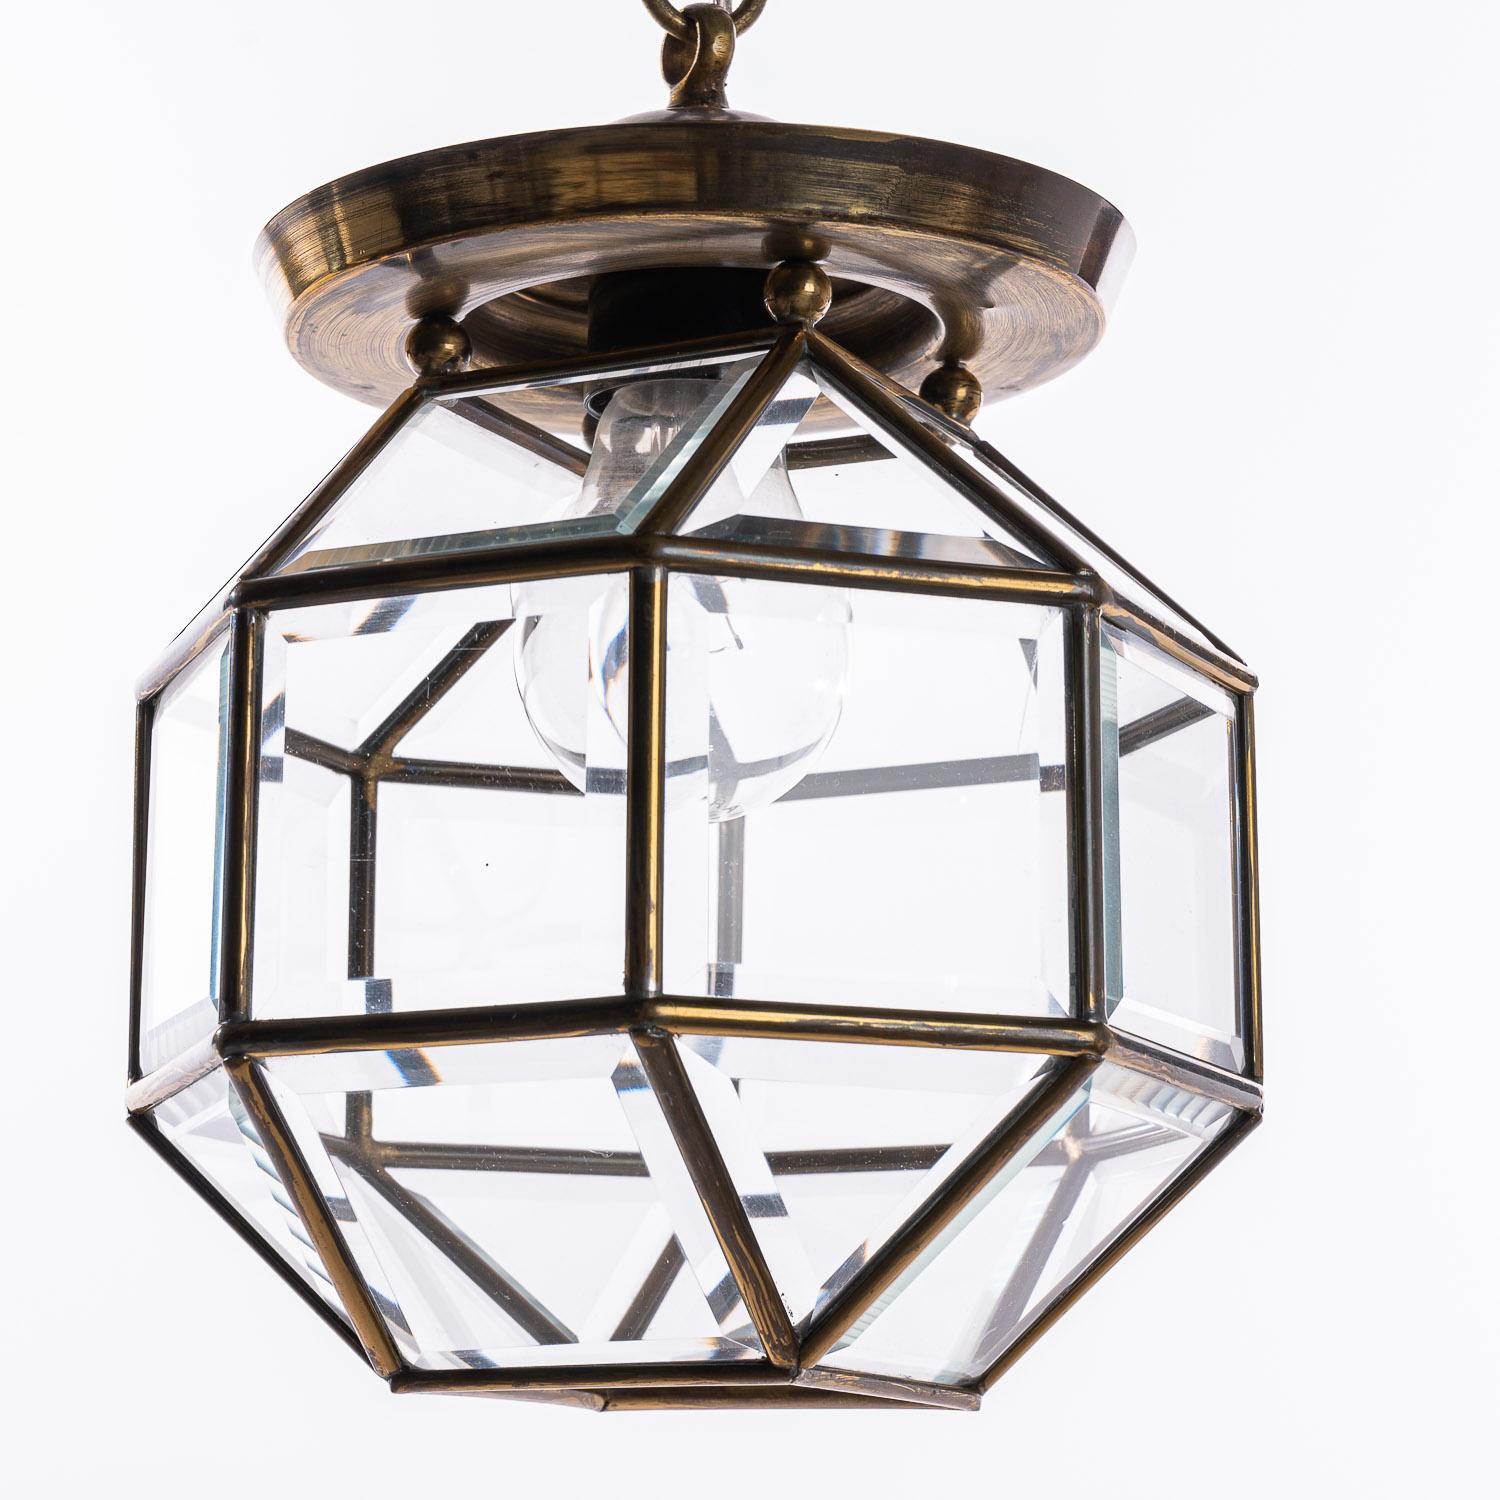 1900-1920 Brass & Glass Amsterdam School Lantern In Fair Condition For Sale In Schoorl, NL